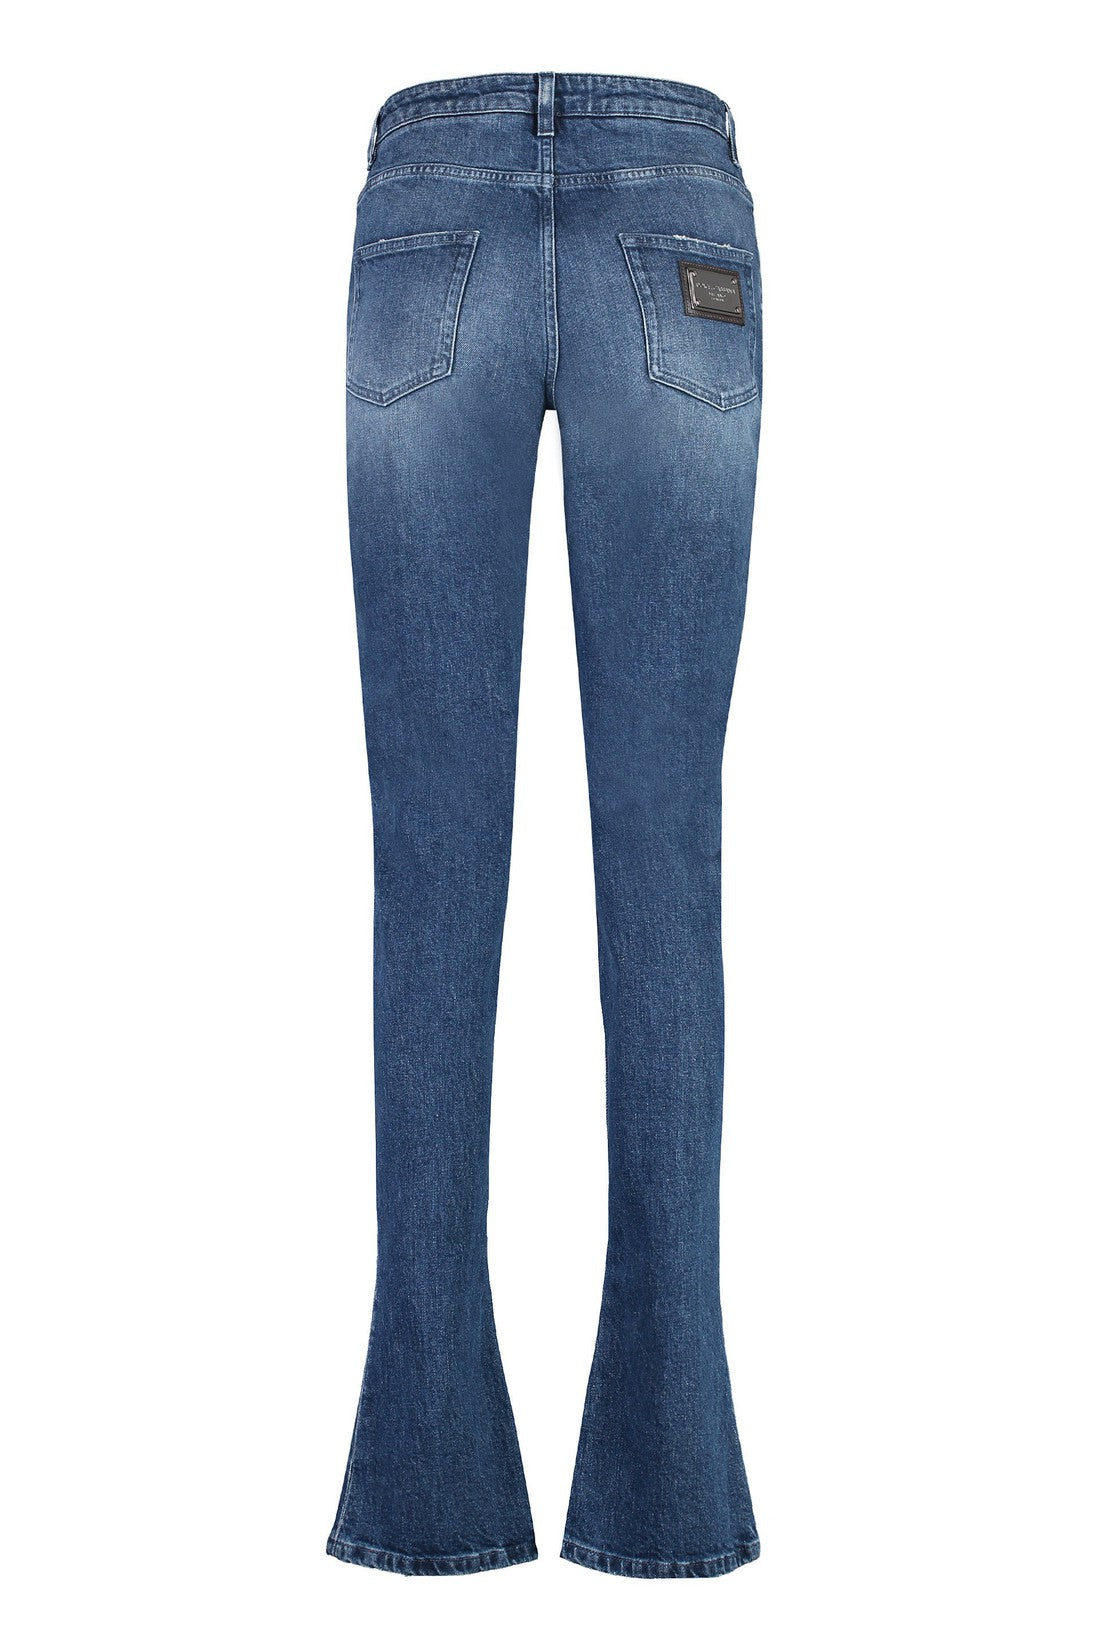 Dolce & Gabbana-OUTLET-SALE-5-pocket skinny jeans-ARCHIVIST